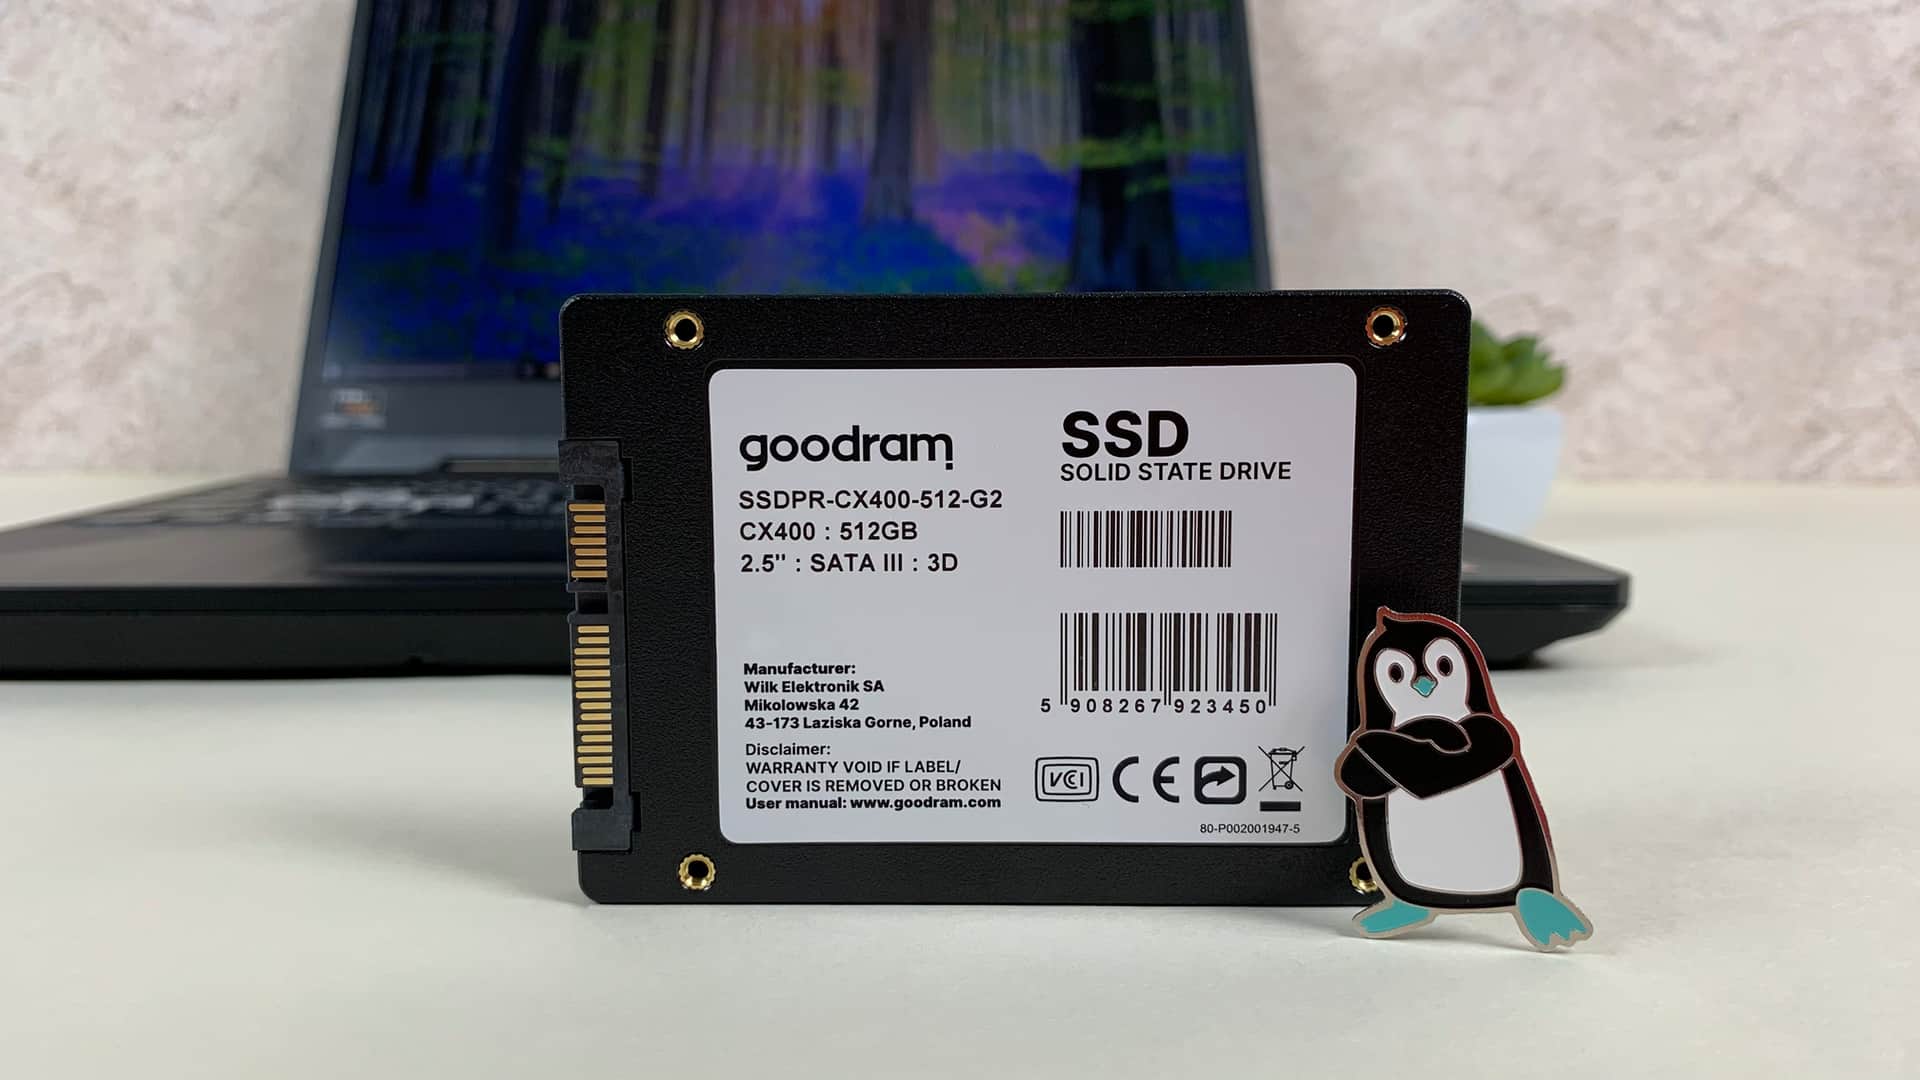 GOODRAM SSD CX400 GEN.2 SATA III